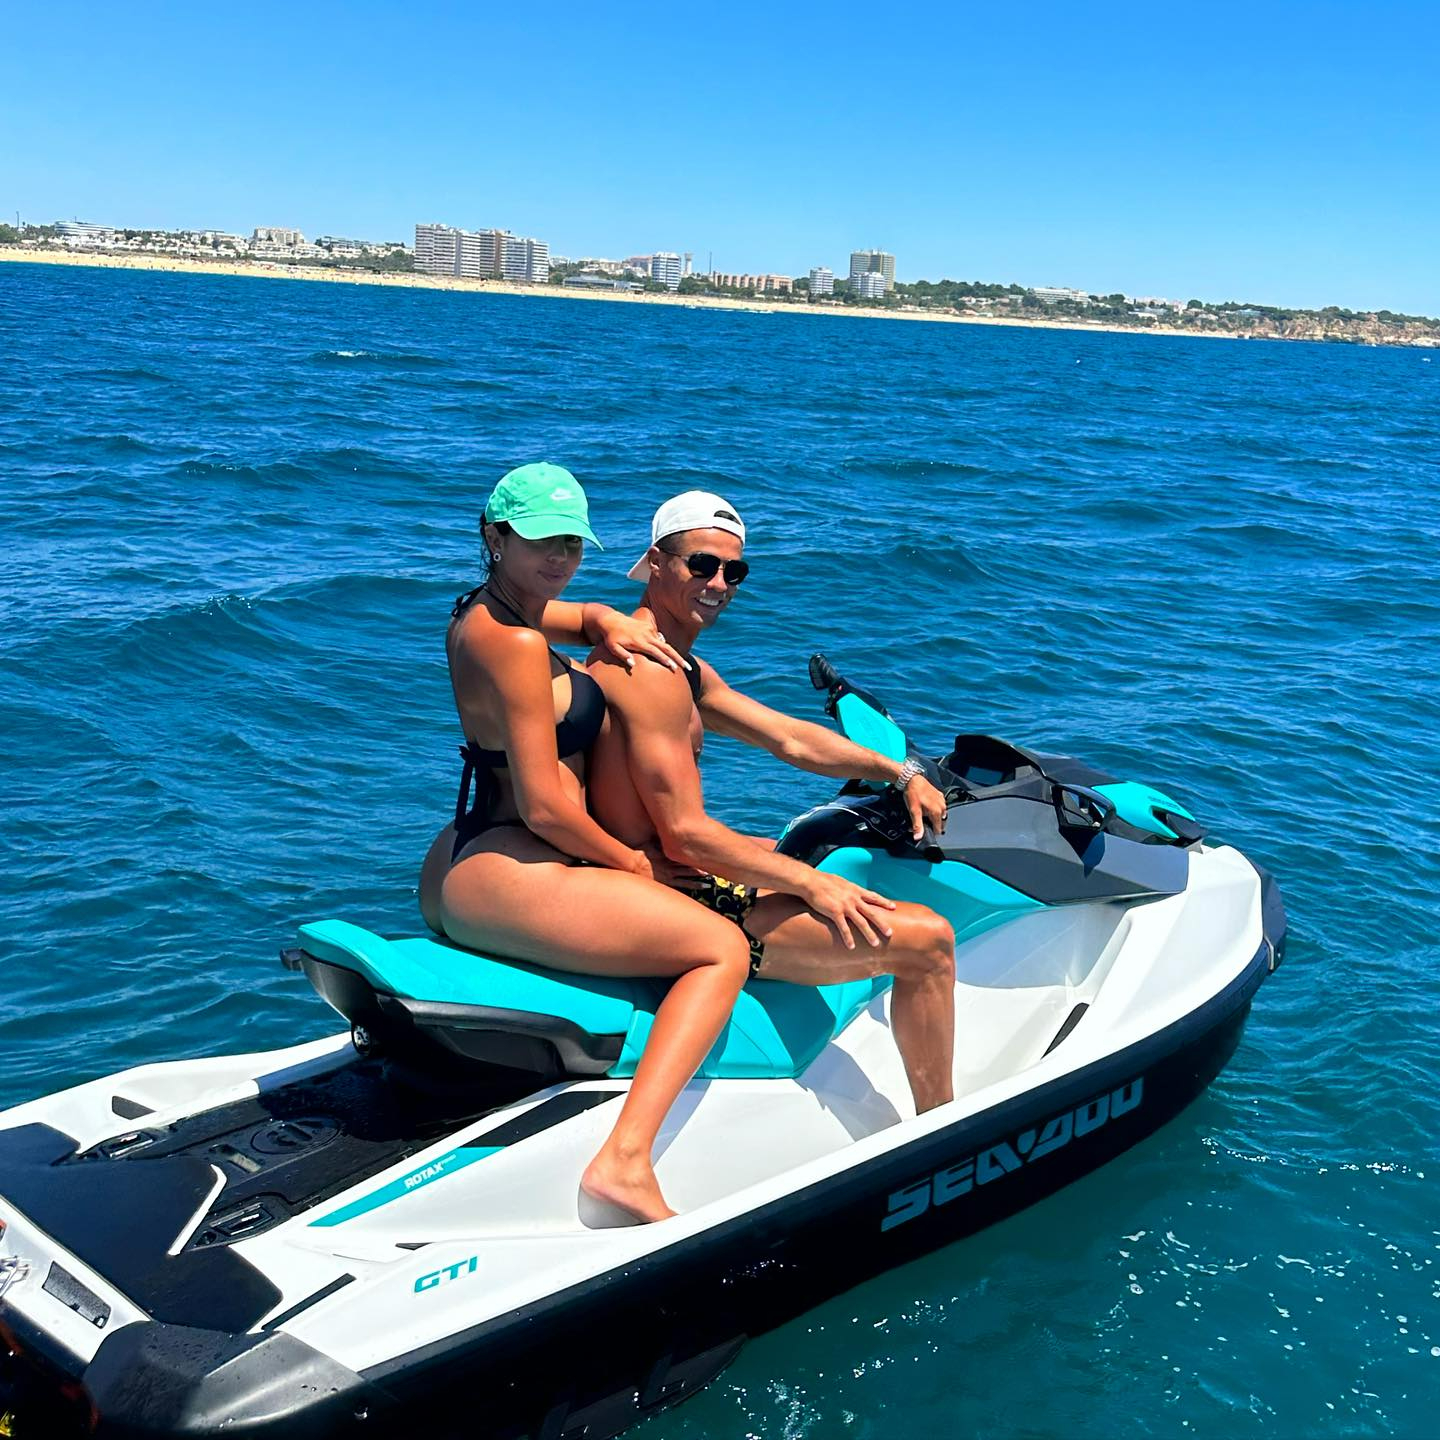 Cristiano Ronaldo's girlfriend Georgina shared pics of them jet-skiing off the coast in Alvor, Portimao